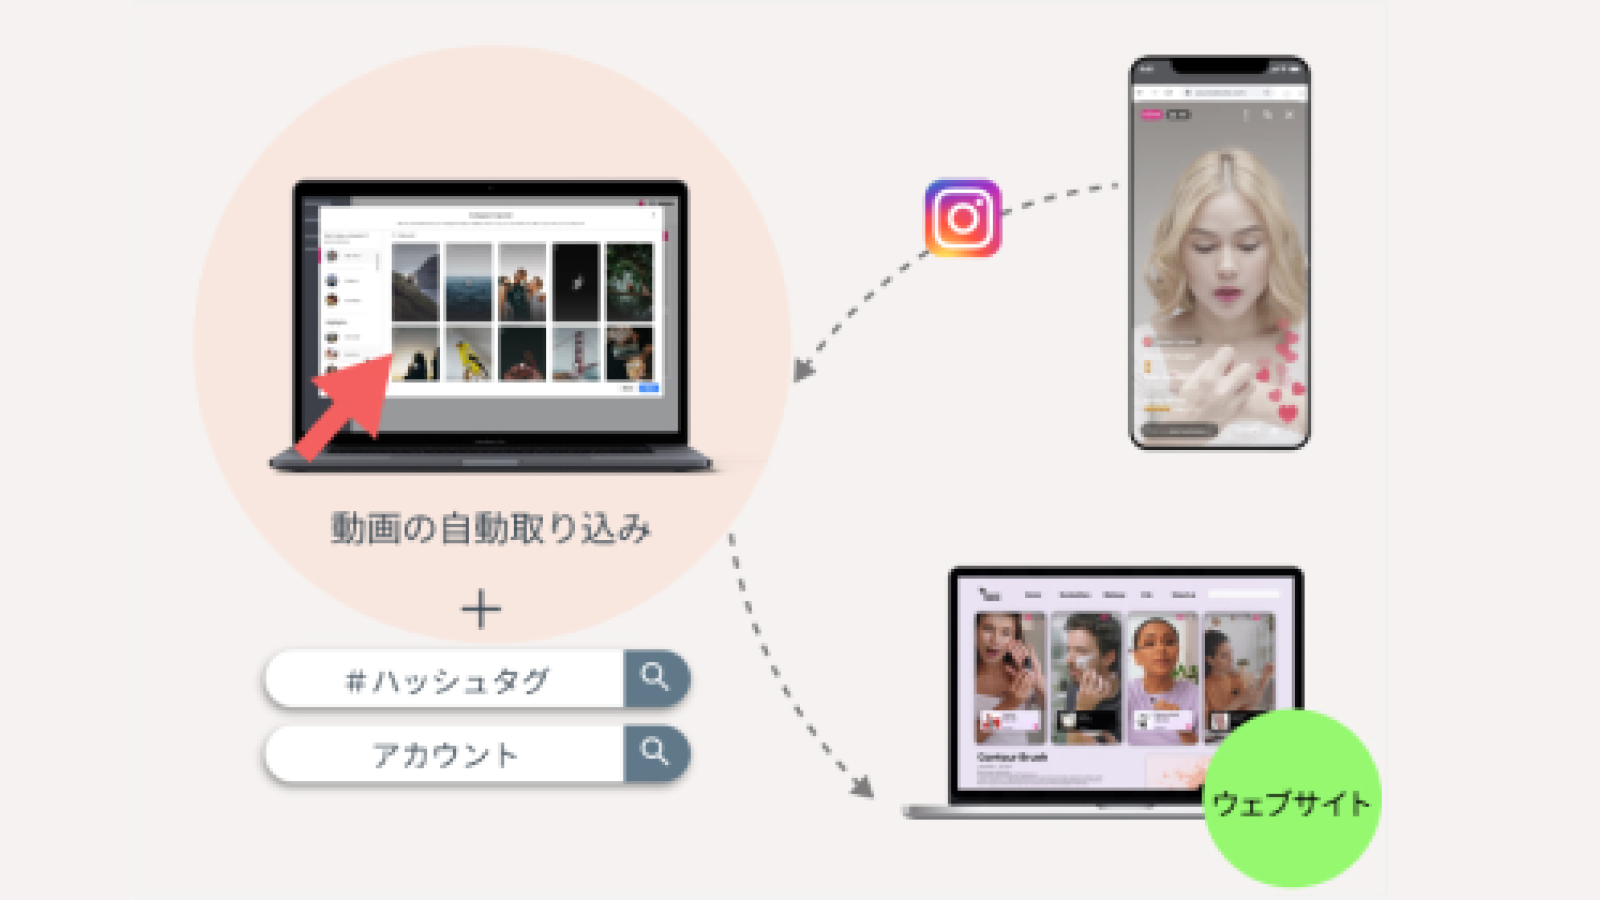 Instagramアカウントと連携することで、すでに投稿されている動画コンテンツを数クリックで自動取り込み。数分でウェブサイトへ